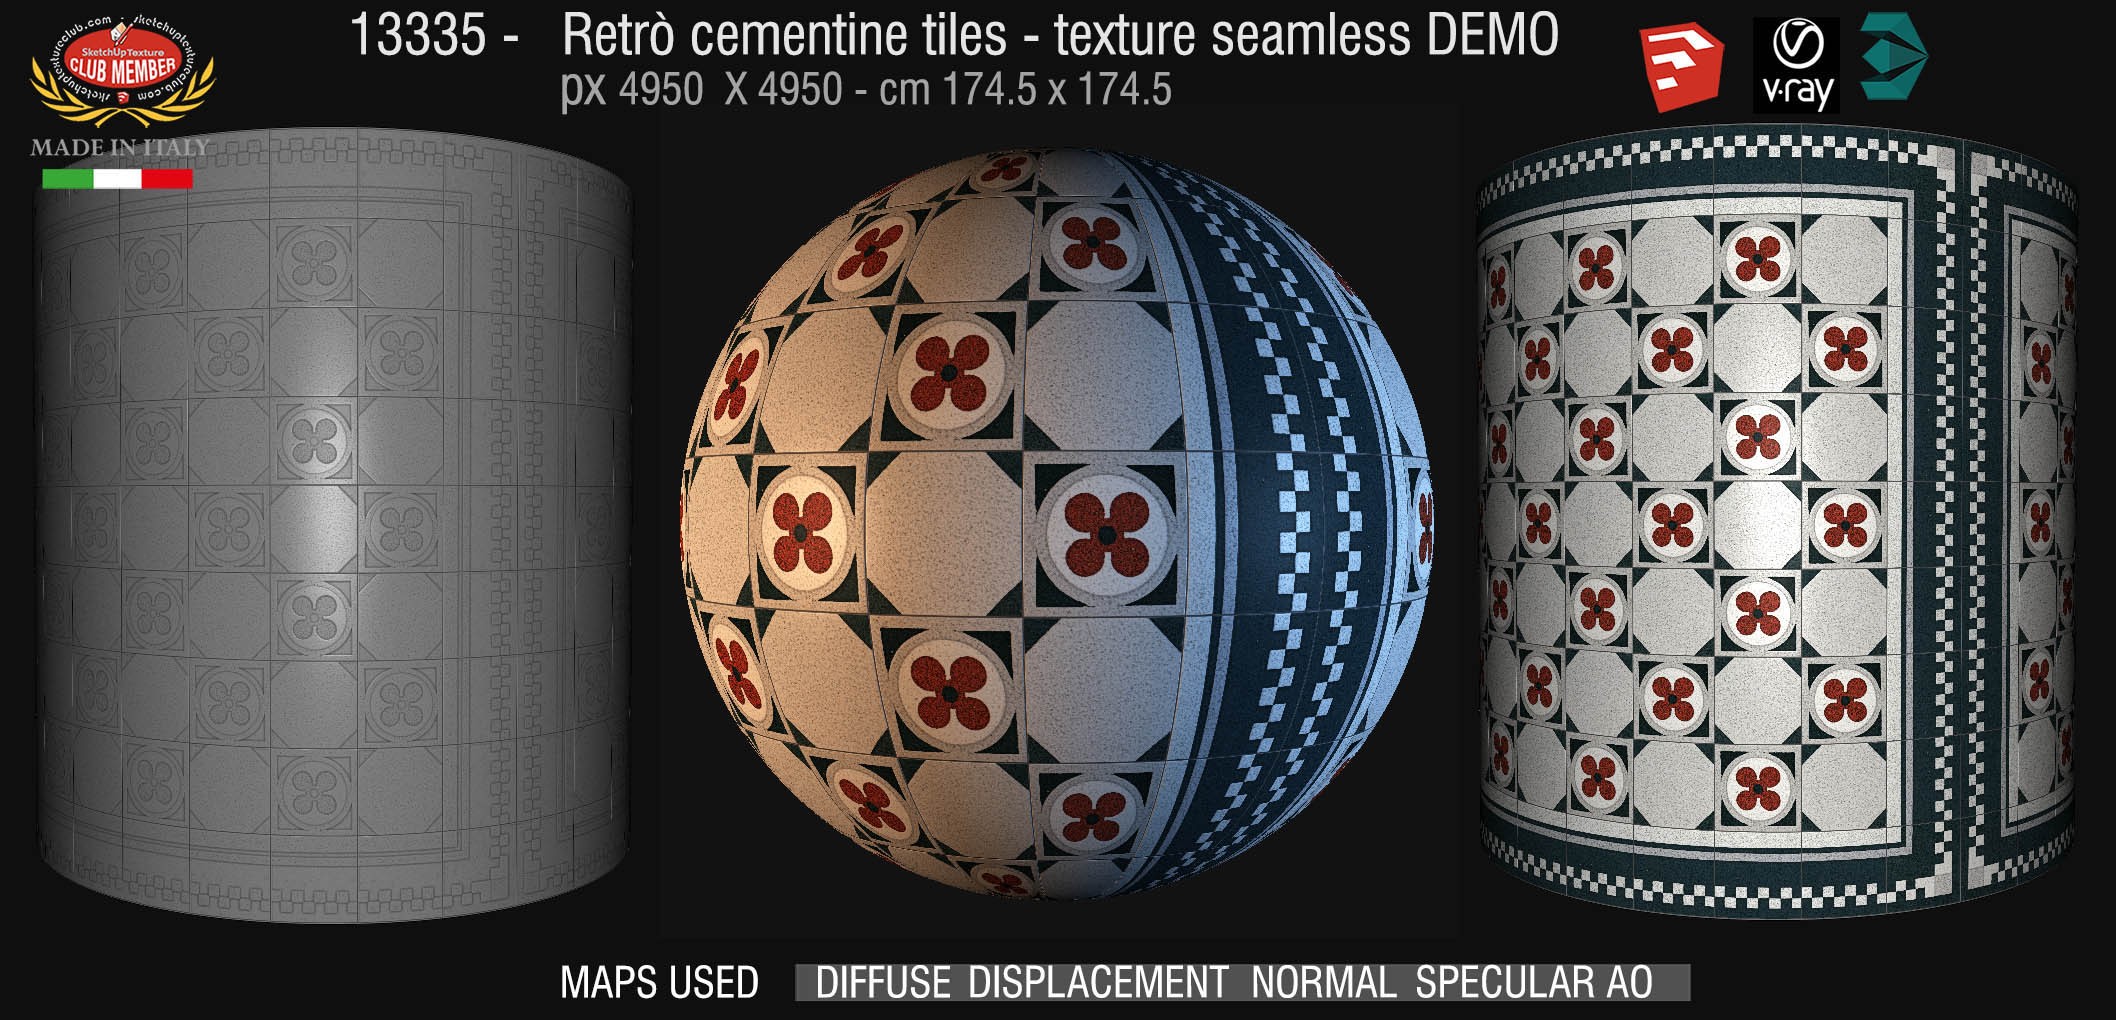 13335 retrò cementine tiles - texture seamless + maps DEMO